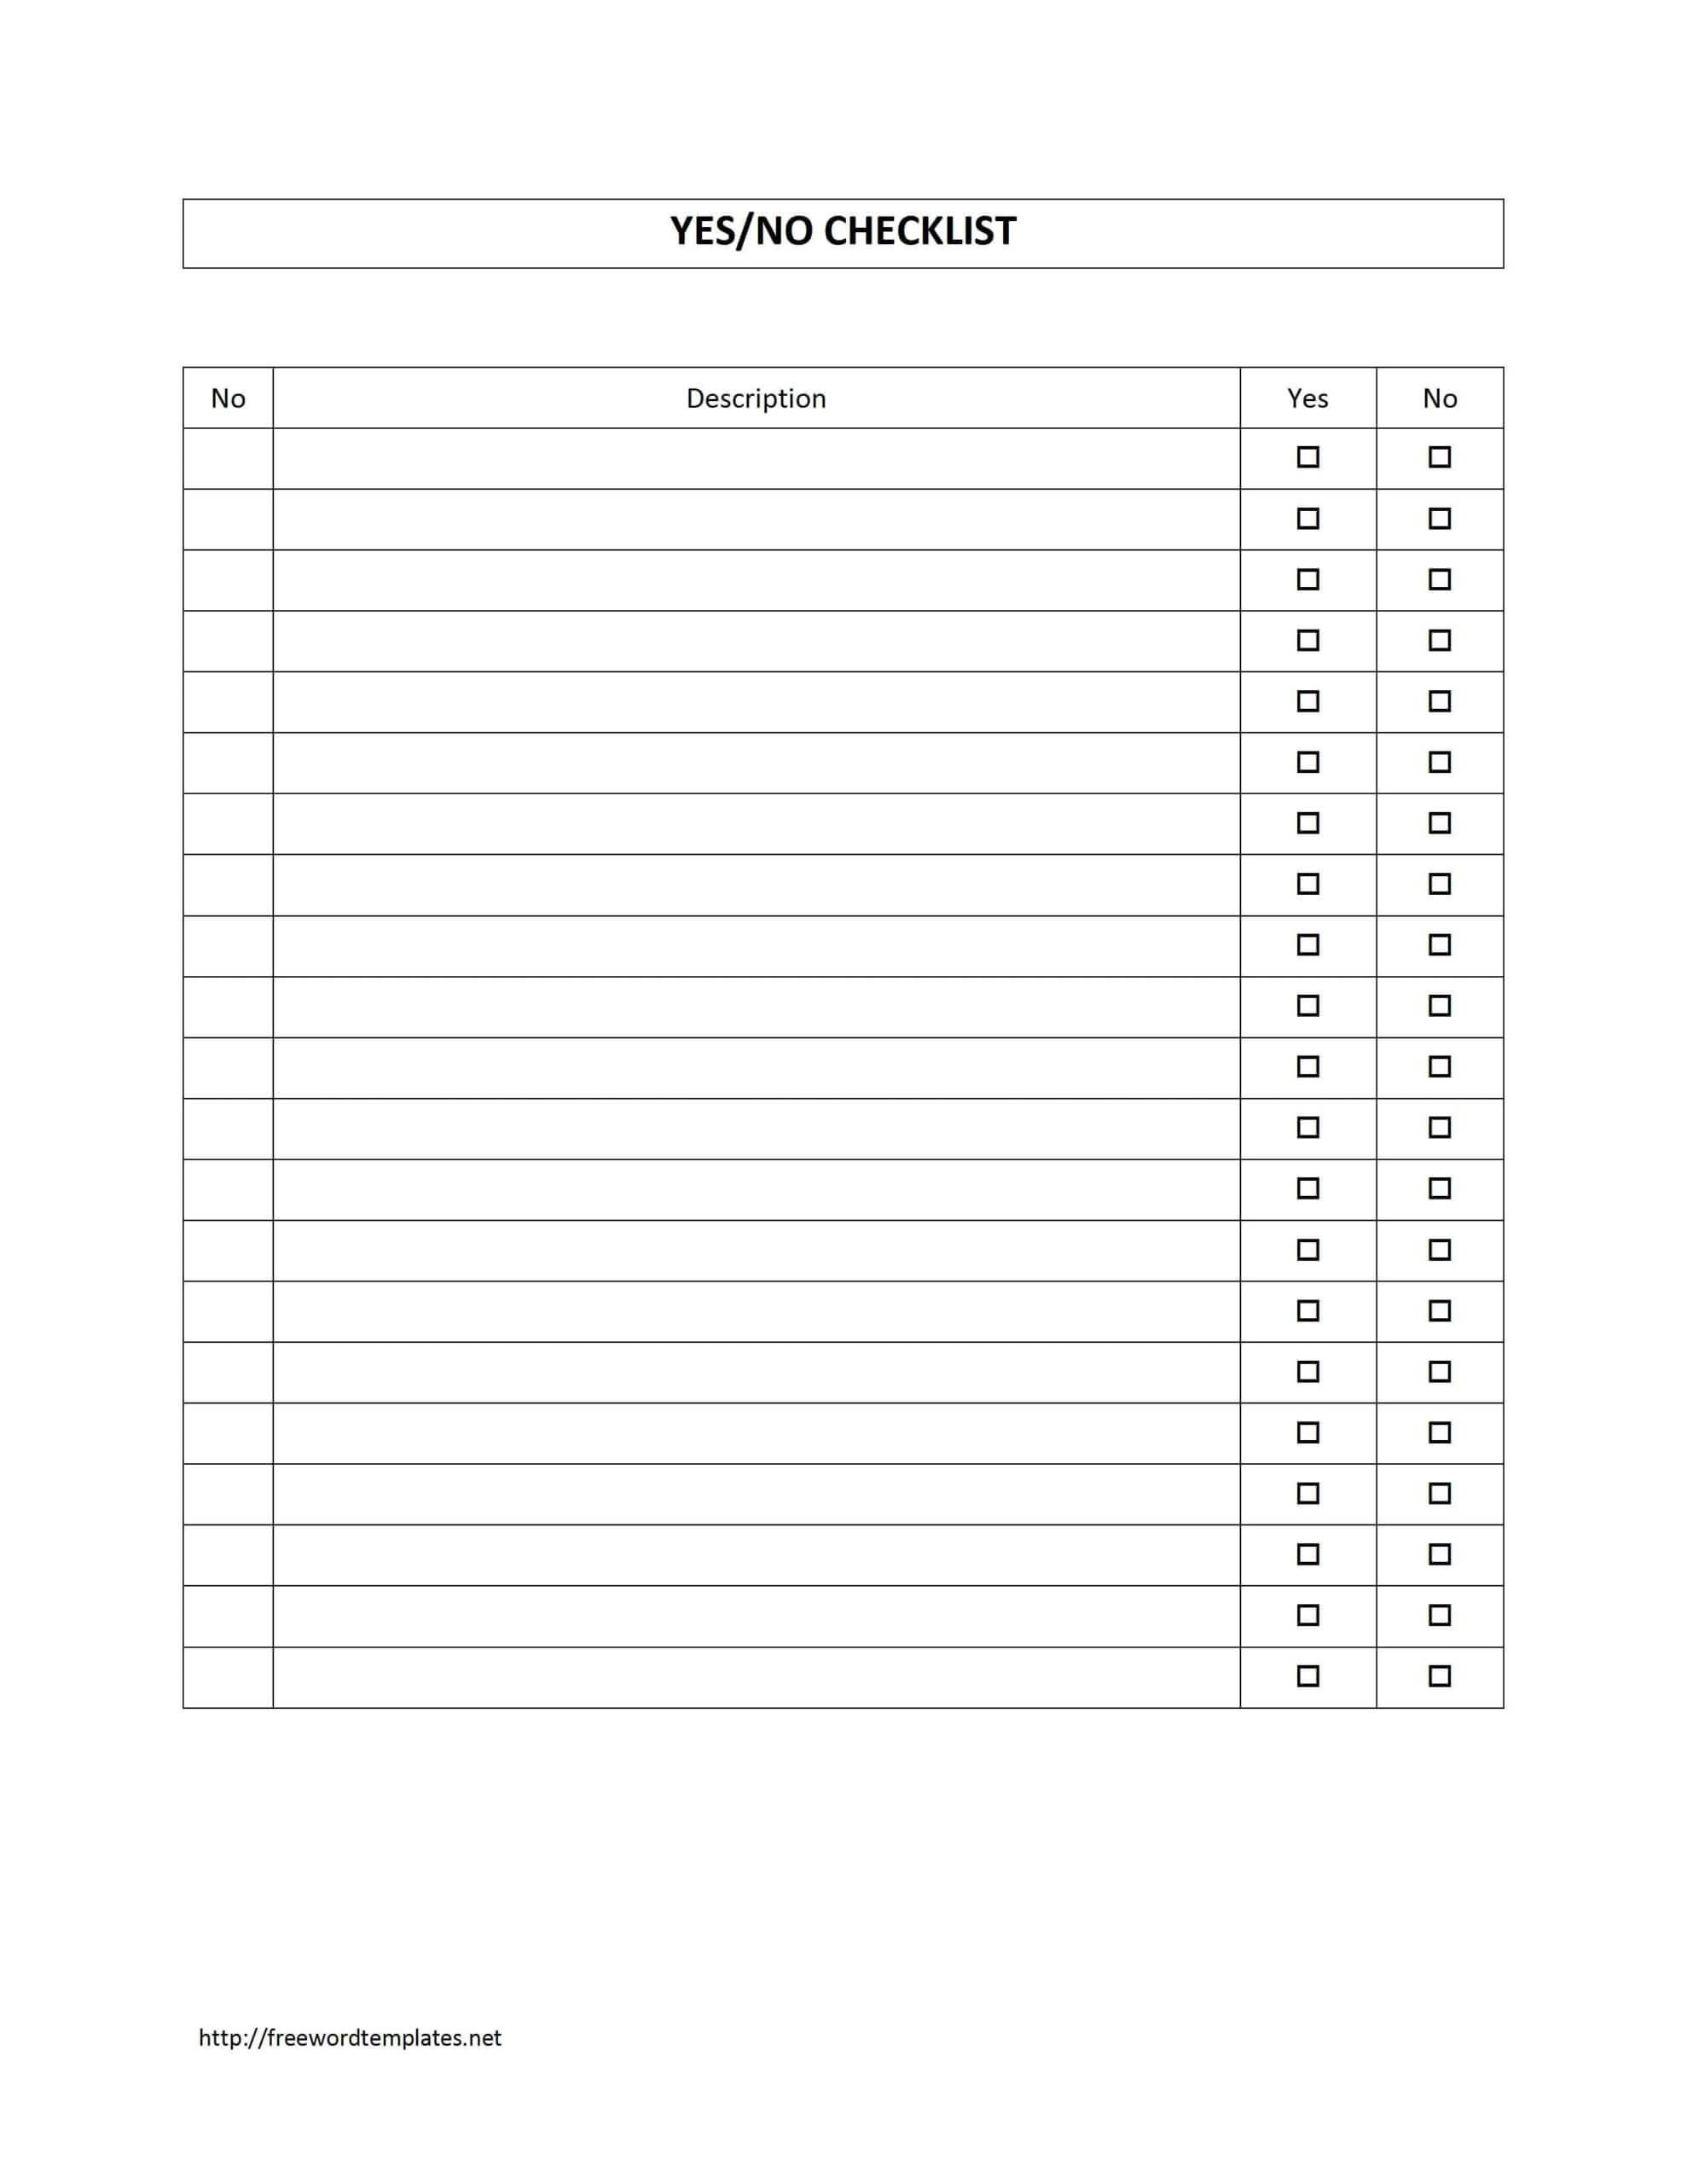 Paper Survey Templates - Yatay.horizonconsulting.co Regarding Questionnaire Design Template Word